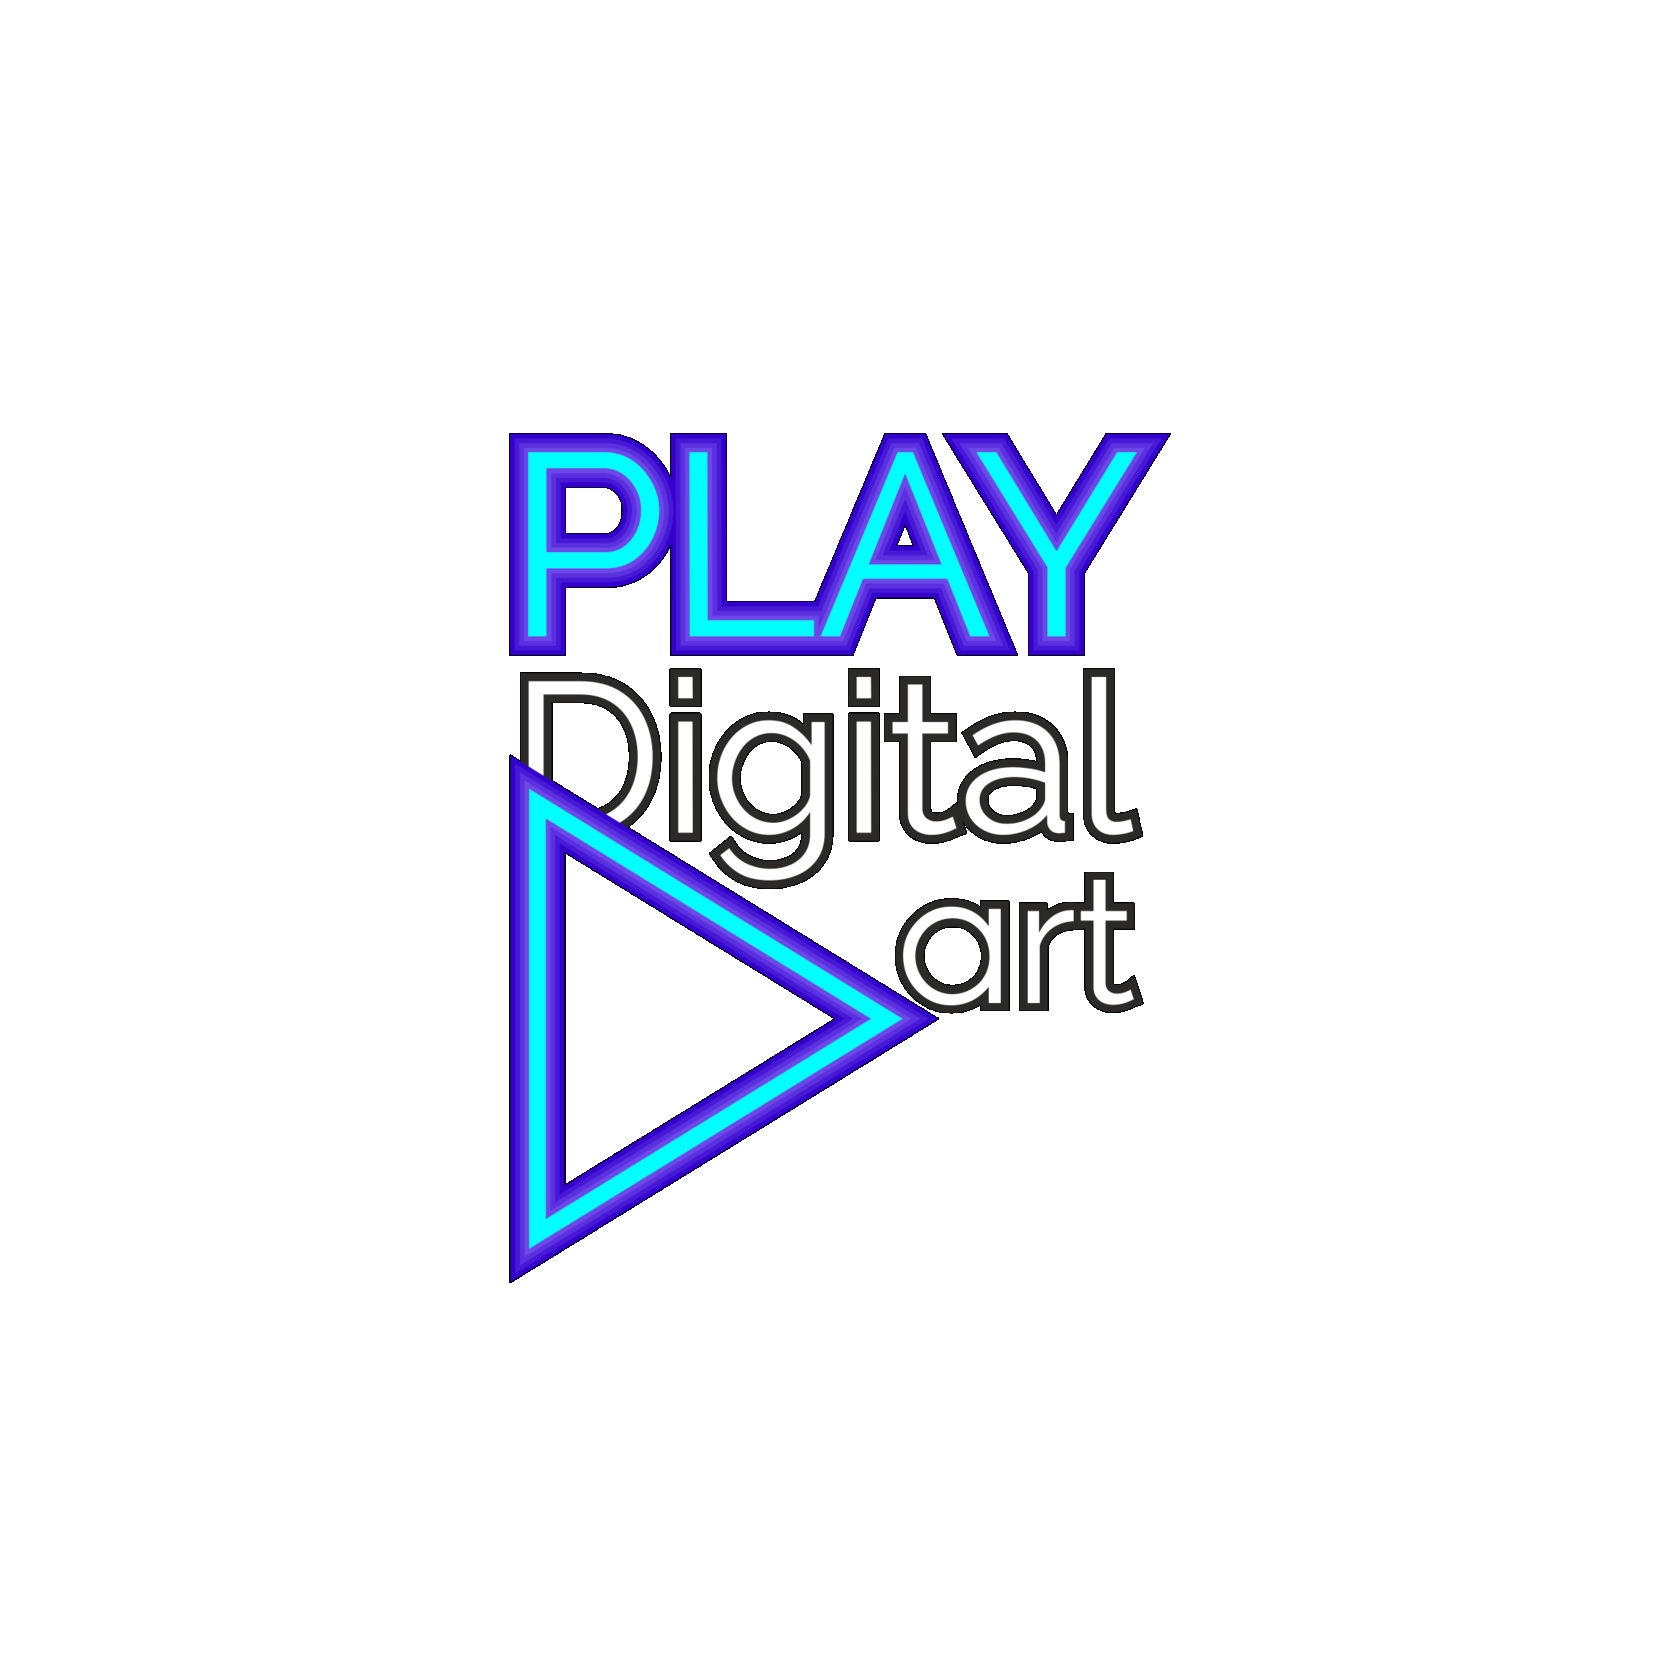 Play digital art екатеринбург